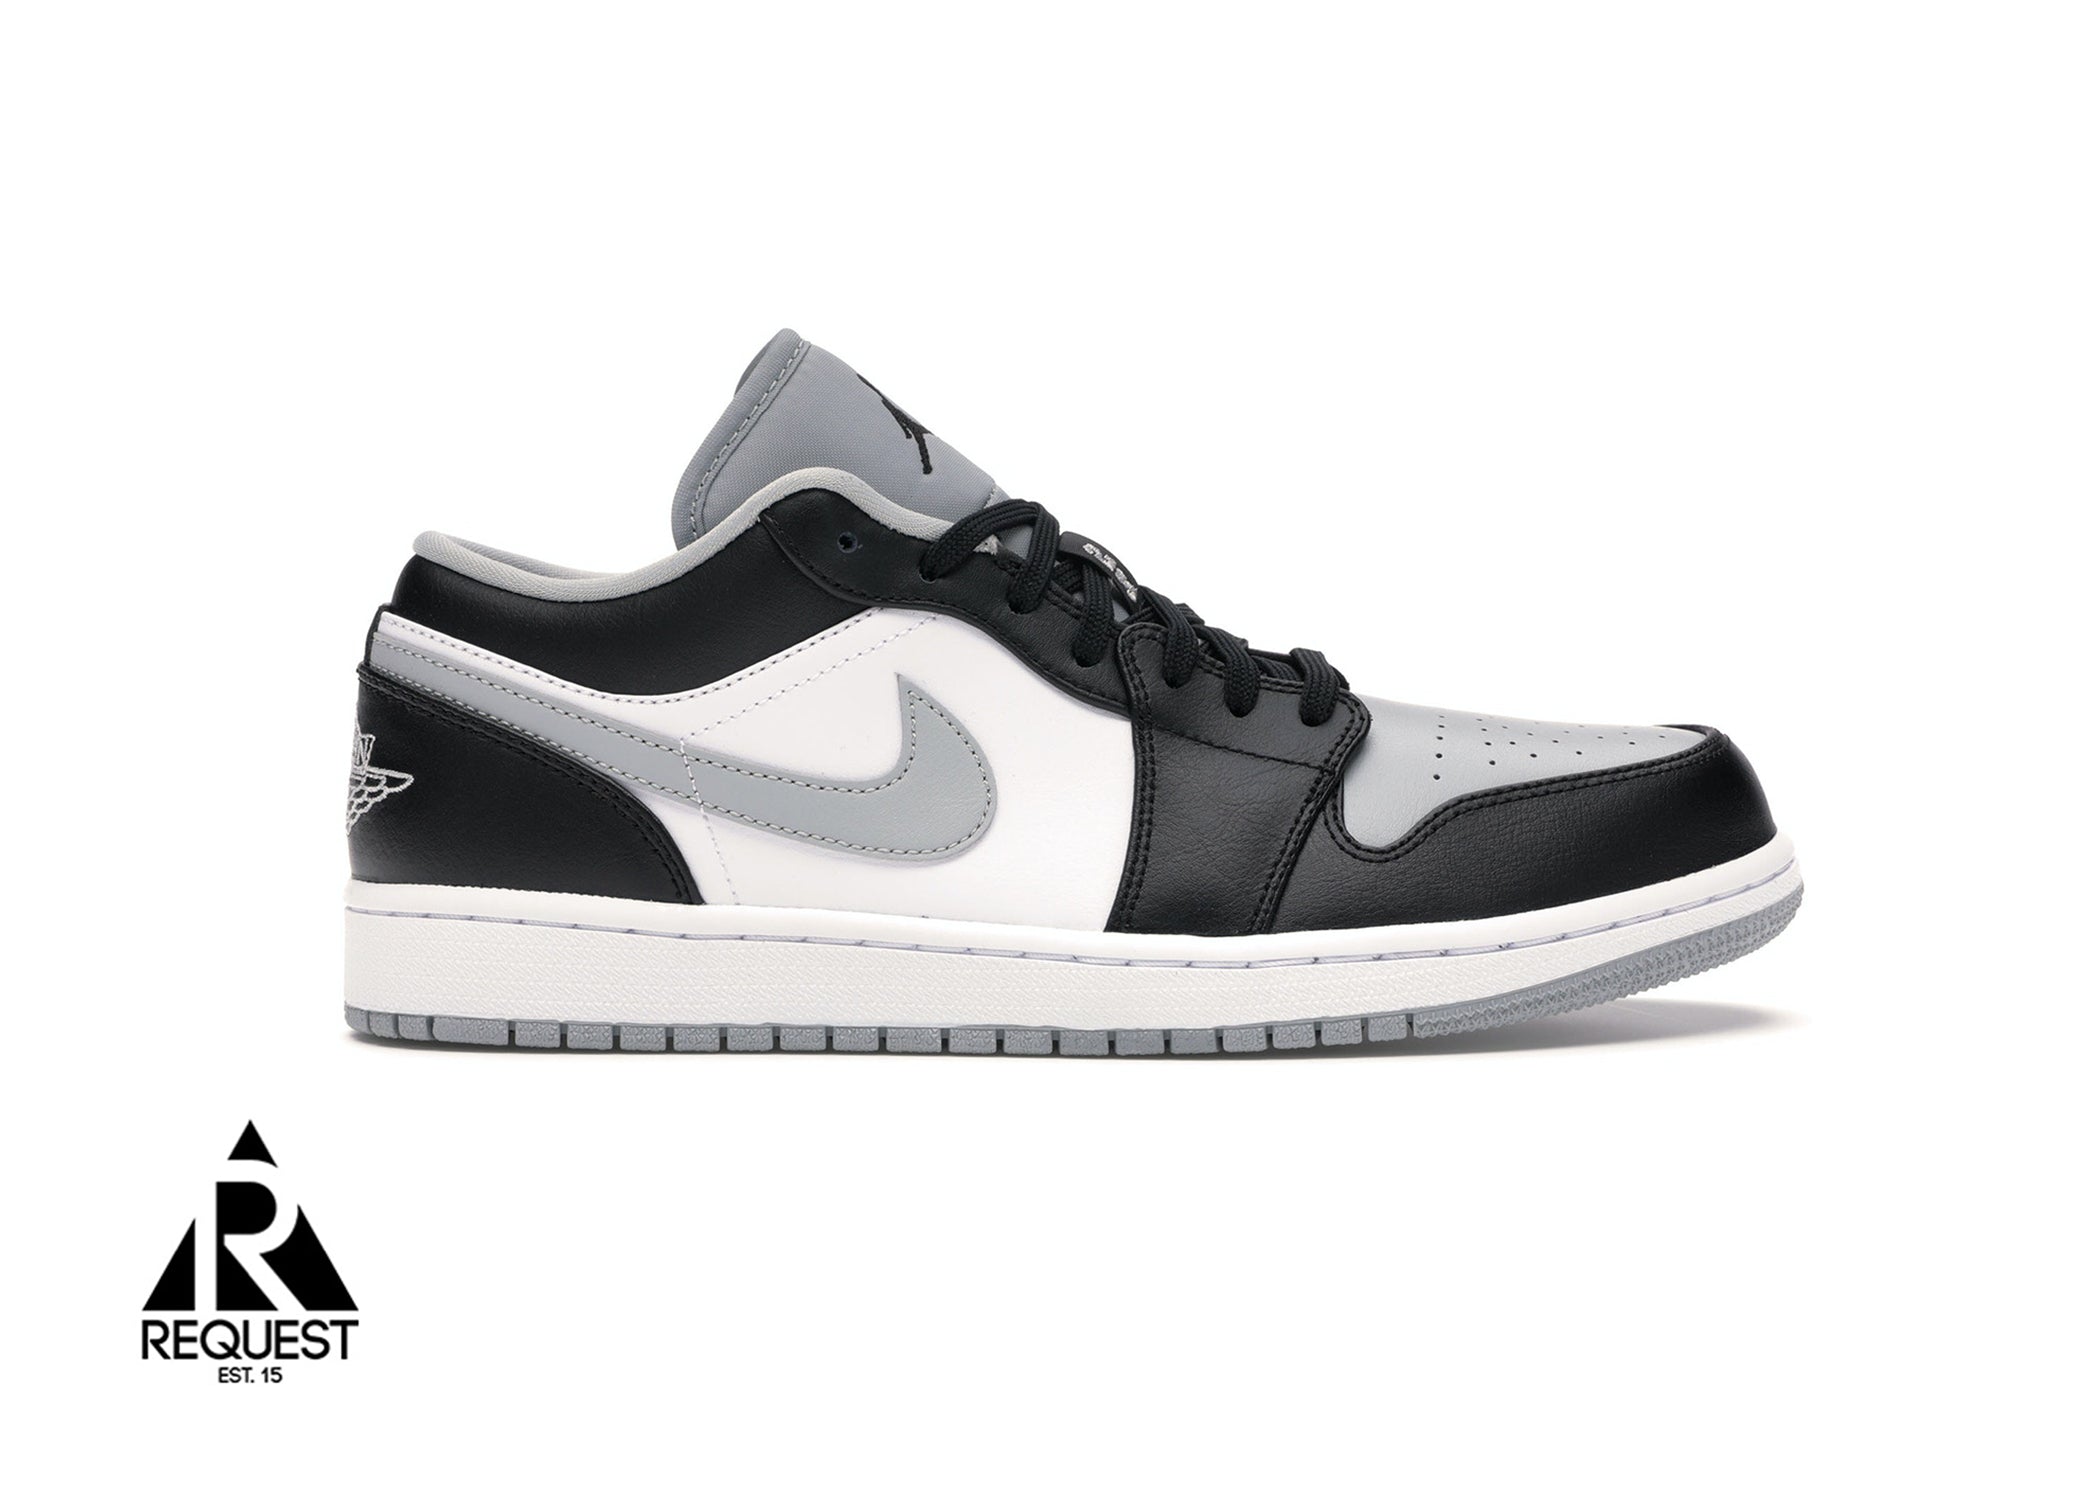 Air Jordan 1 Low “Grey Toe”